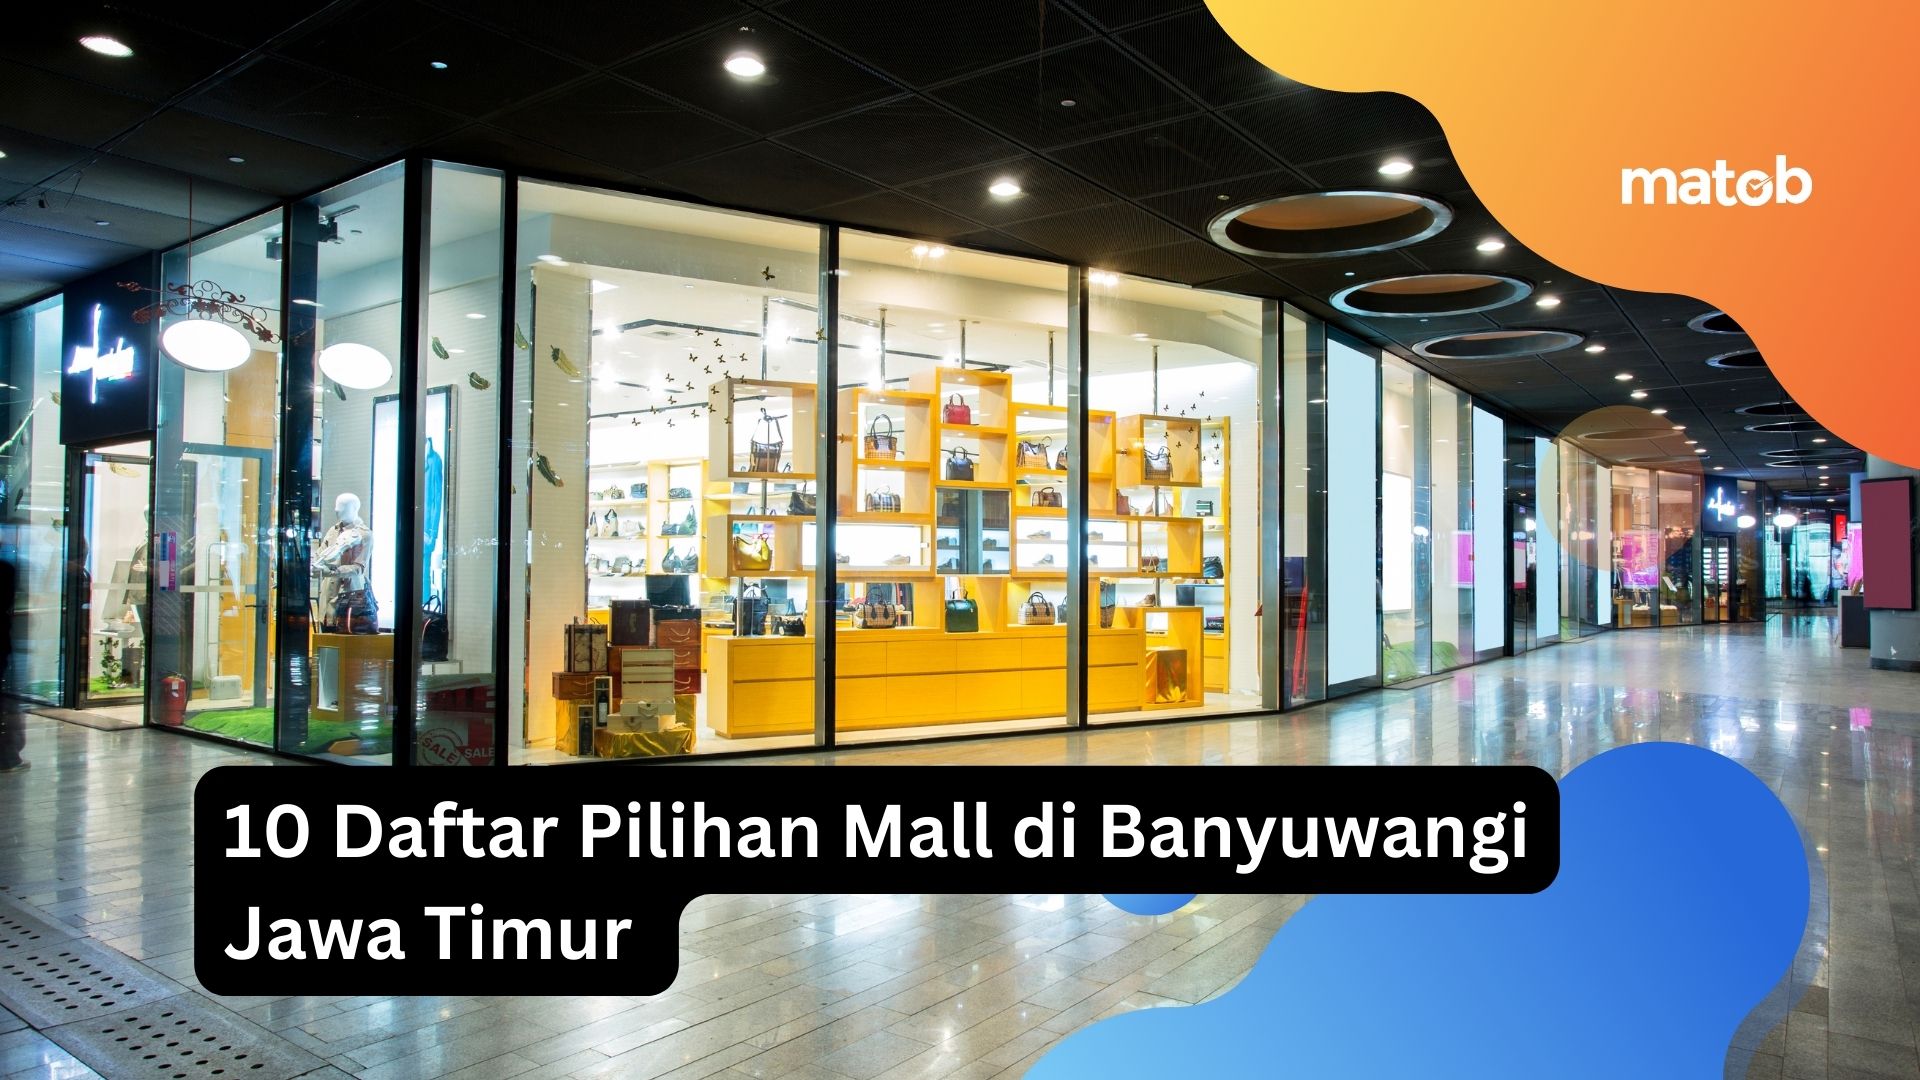 10 Daftar Pilihan Mall di Banyuwangi Jawa Timur